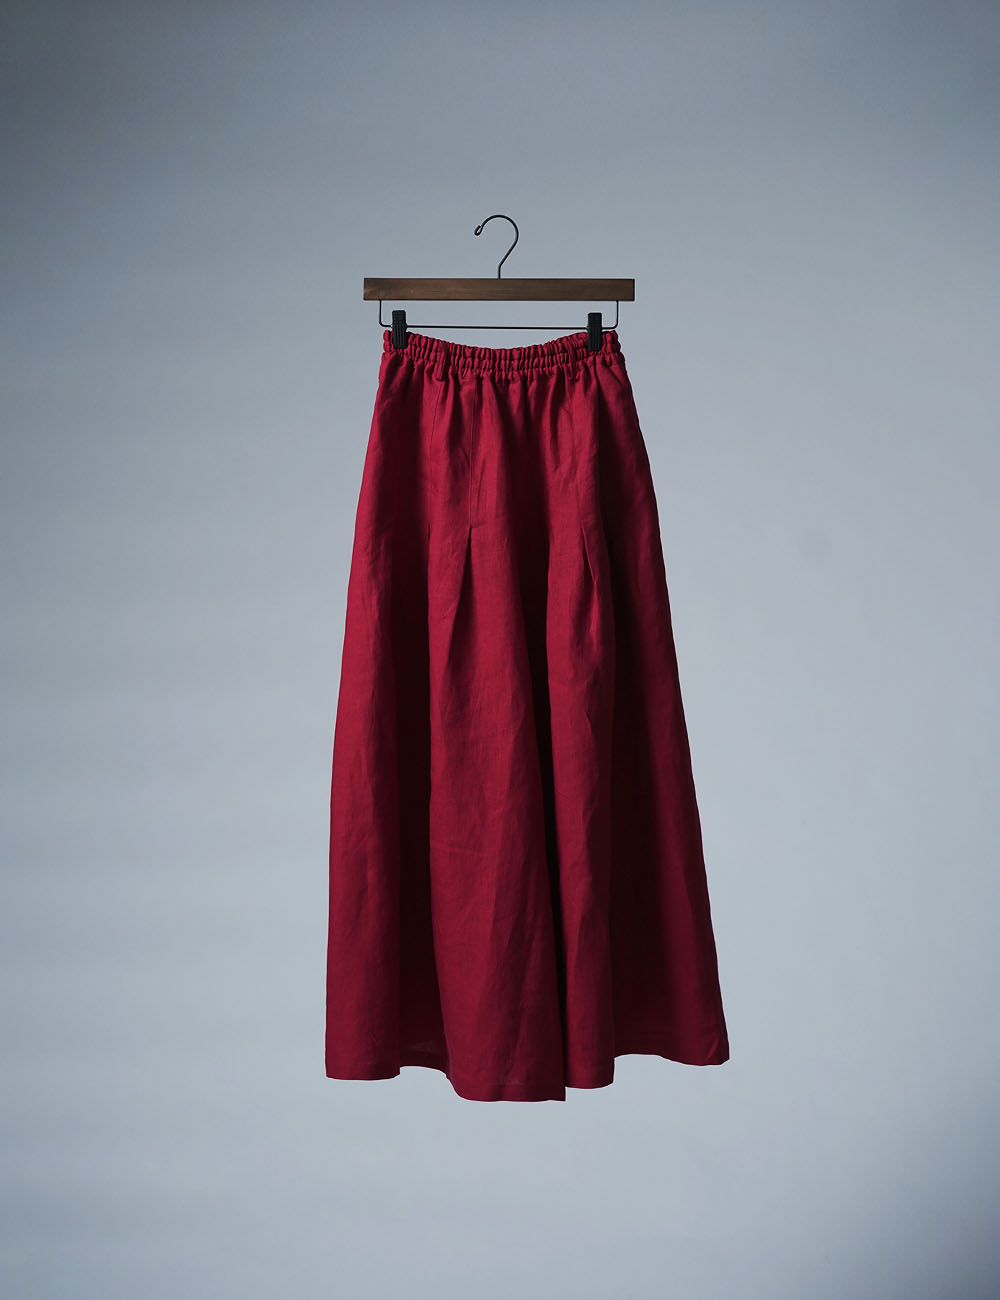 【wafu】Linen Pants 袴(はかま)パンツ/赤紅 b002k-akb1